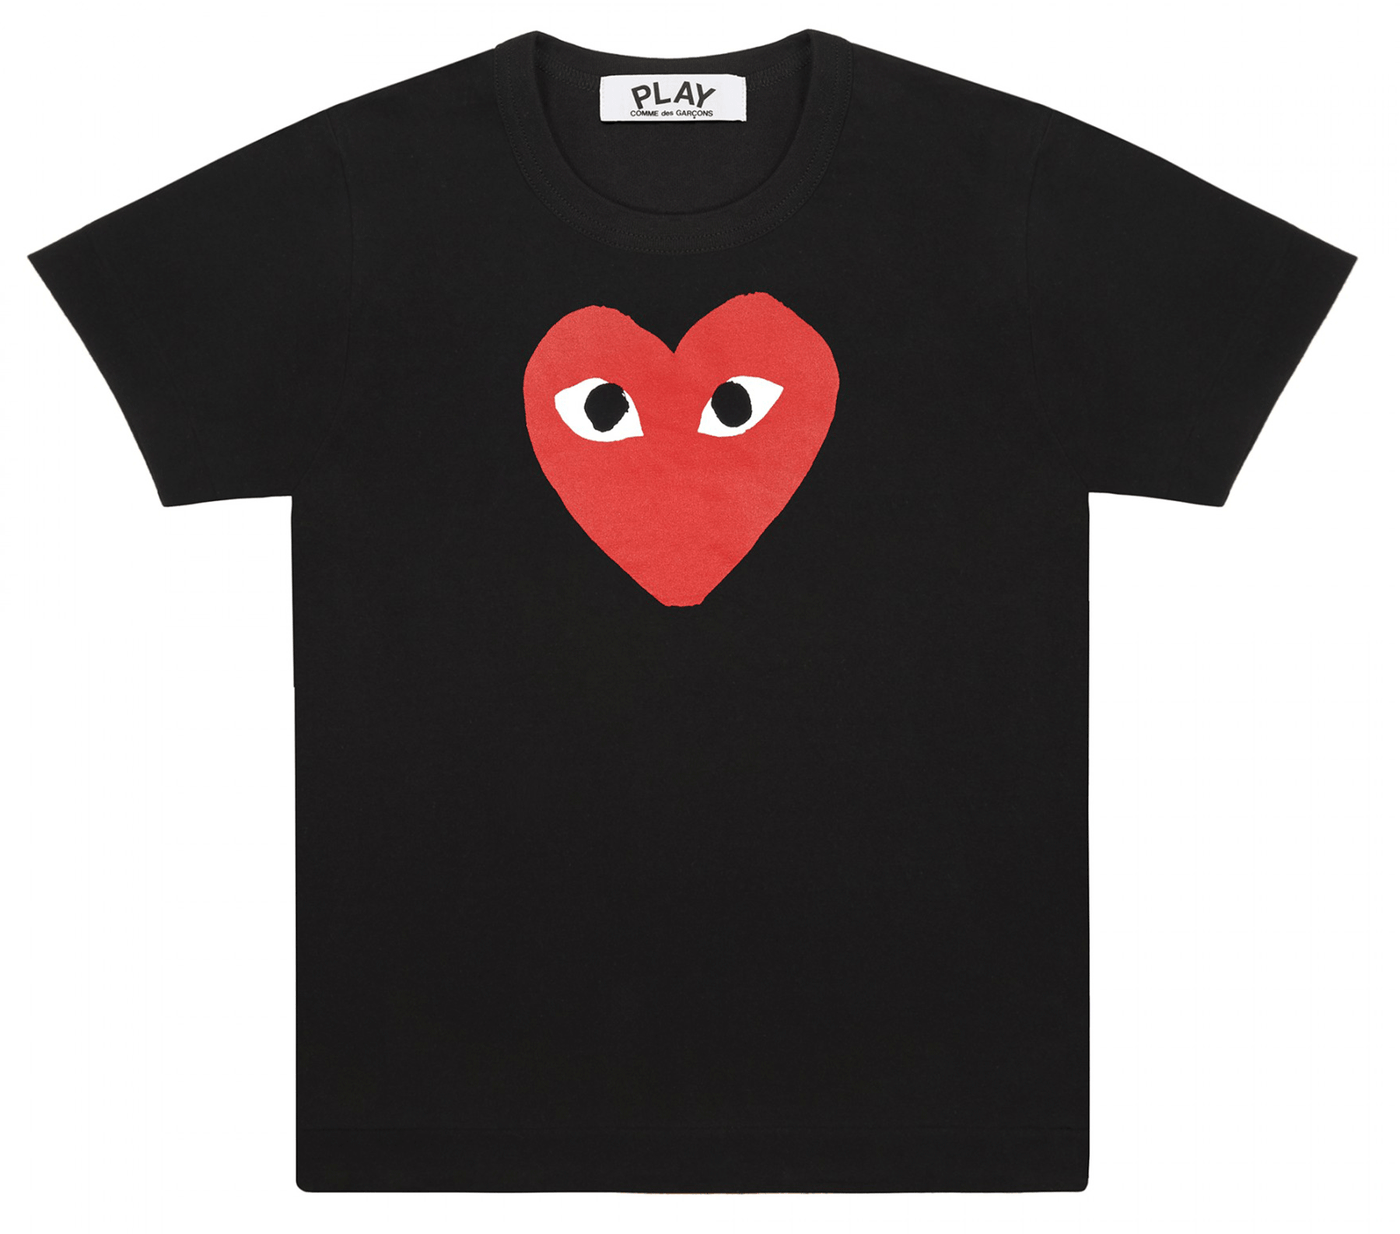 Comme-des-Garcons-Play-Red-Heart-T-Shirt-Men-Black-1